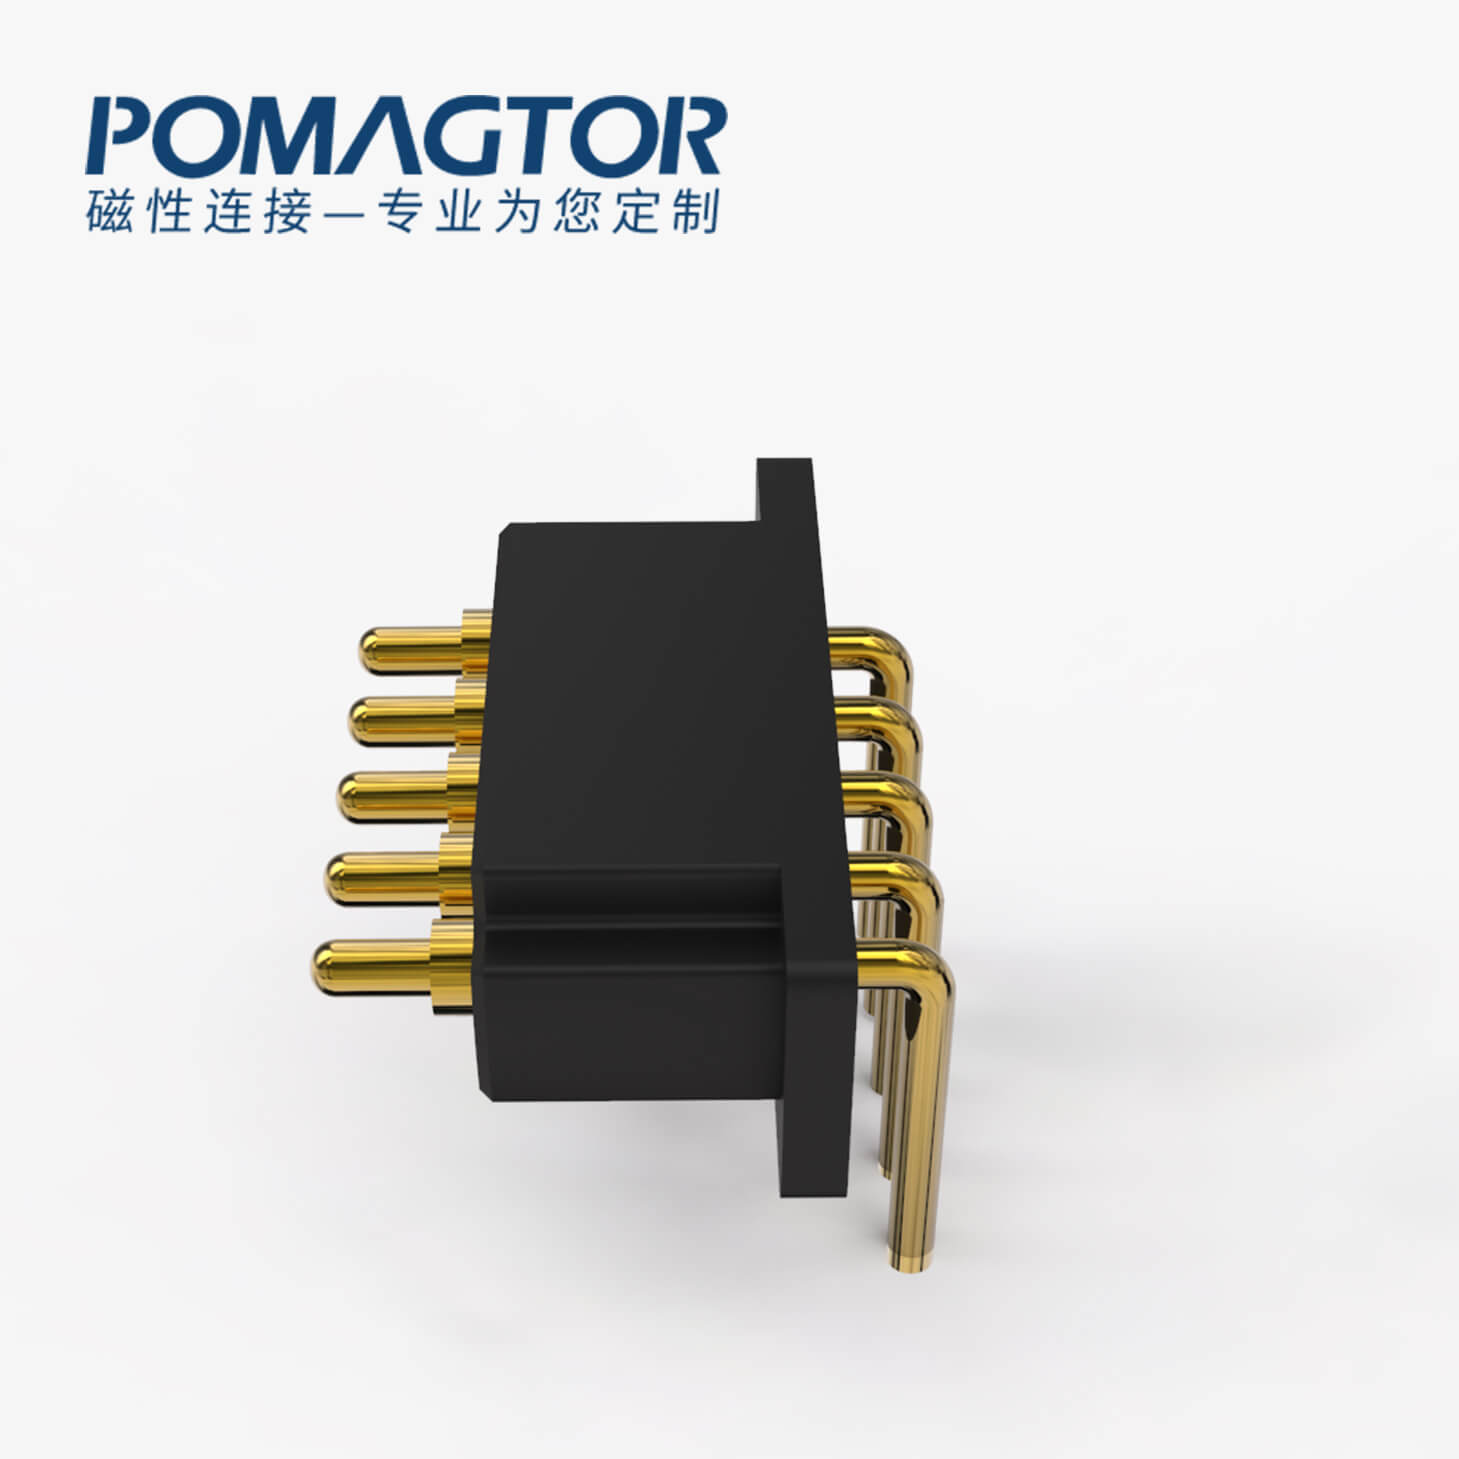 POGO PIN连接器 折弯式：5PIN，电镀黄铜Au5u，电压12V，电流8A，工作行程1.5mm:60±20gf，弹力10000次+，工作温度-30°~85°